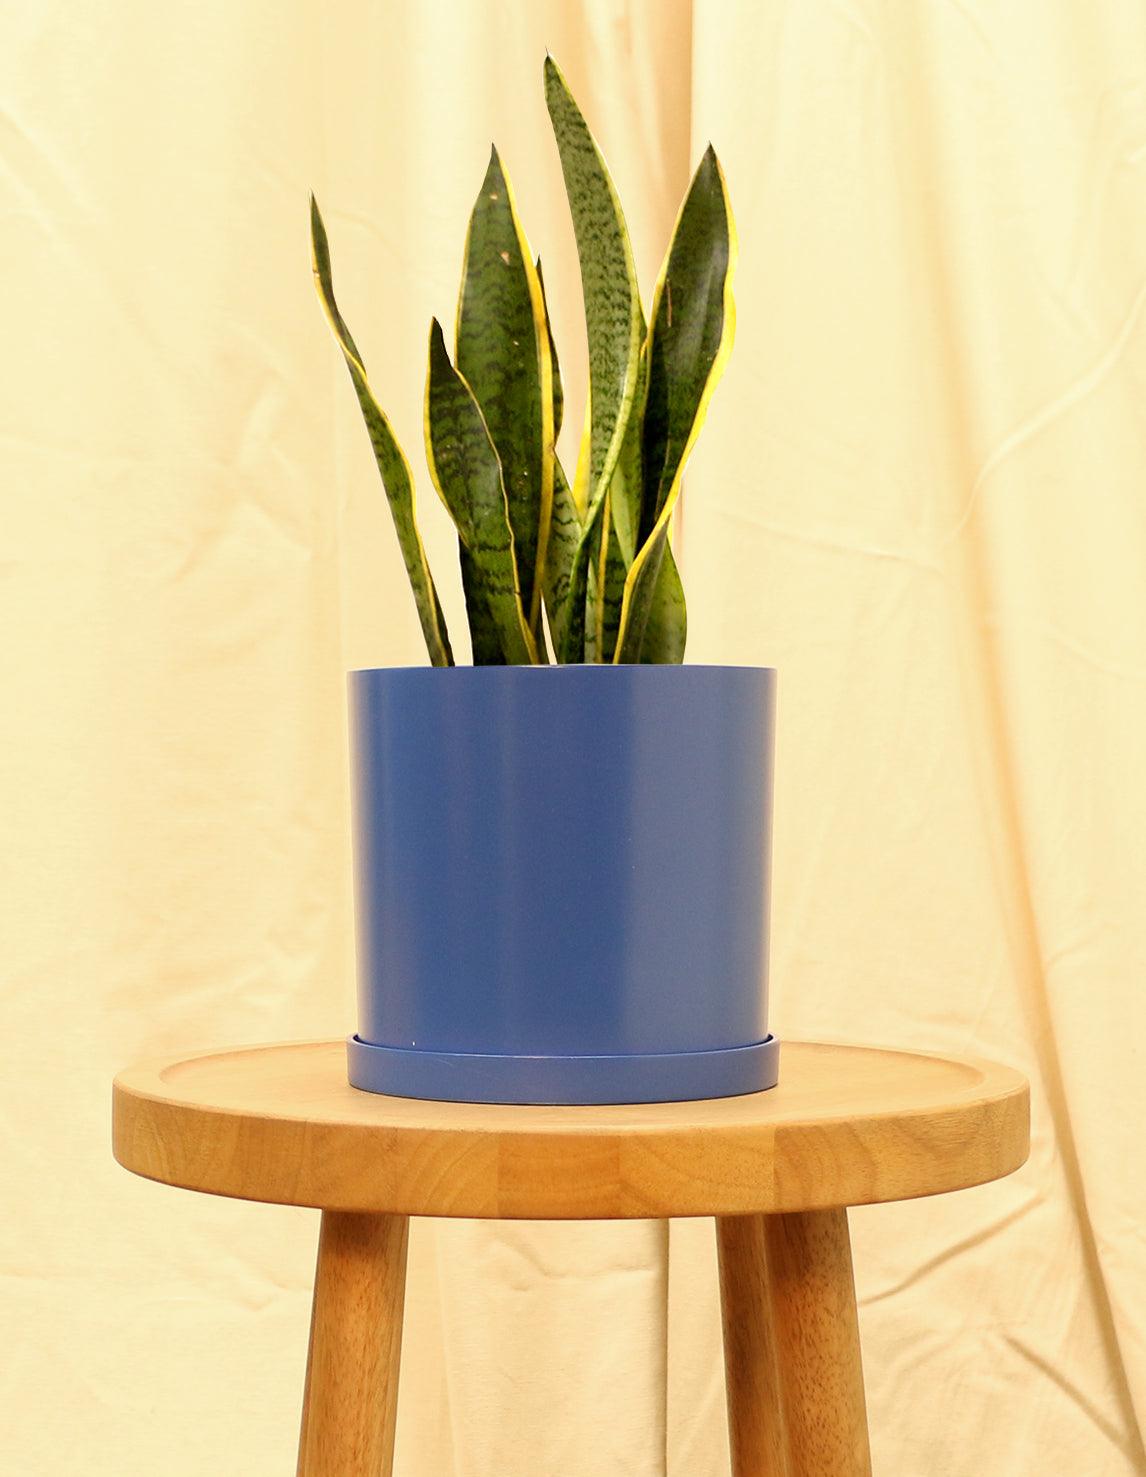 Medium Variegated Snake Plant in blue pot.